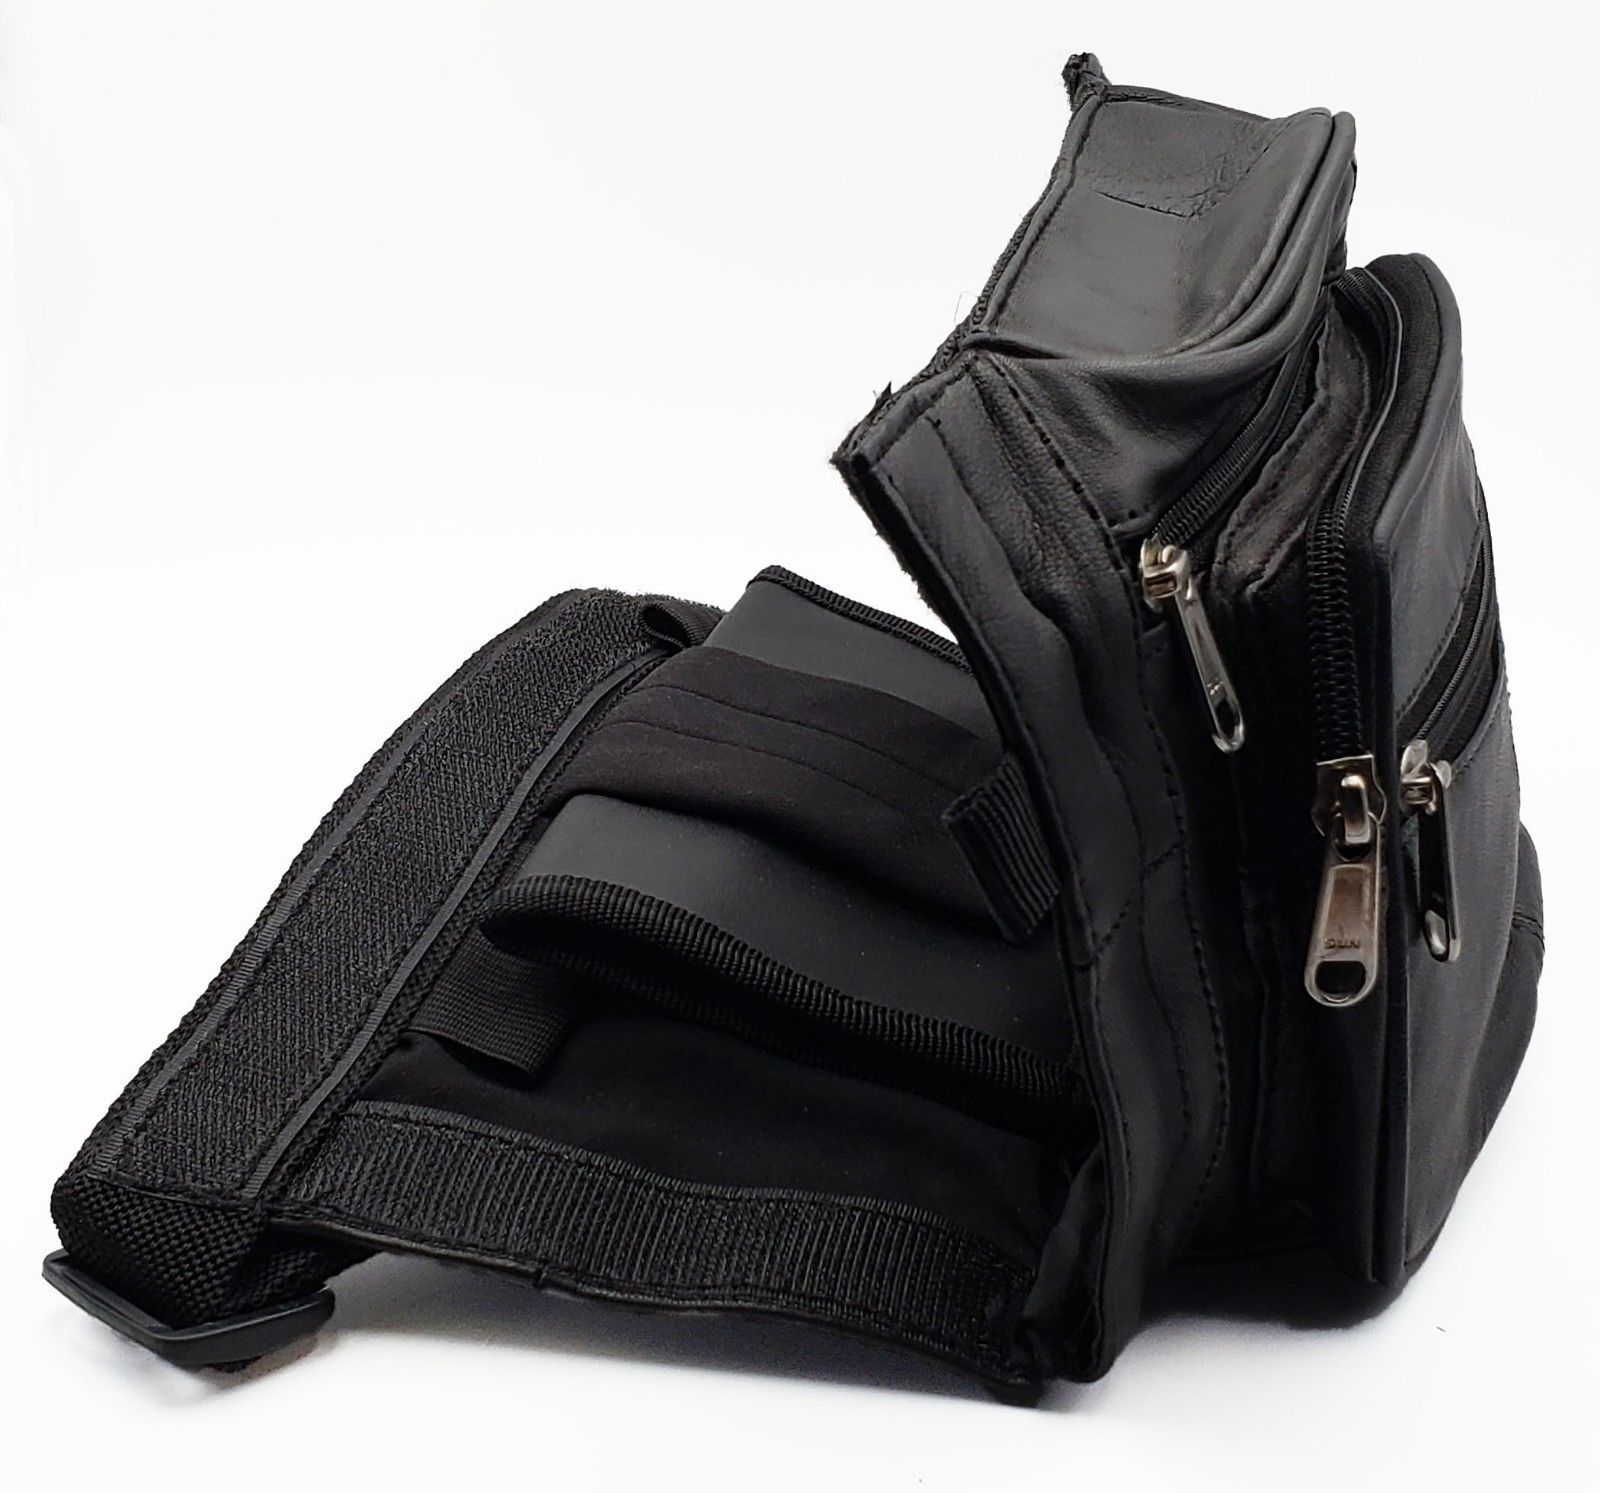 Leather Pistol Gun CCW Concealed Holster Belt Bag Waist Fanny Pack New Black - Holsters